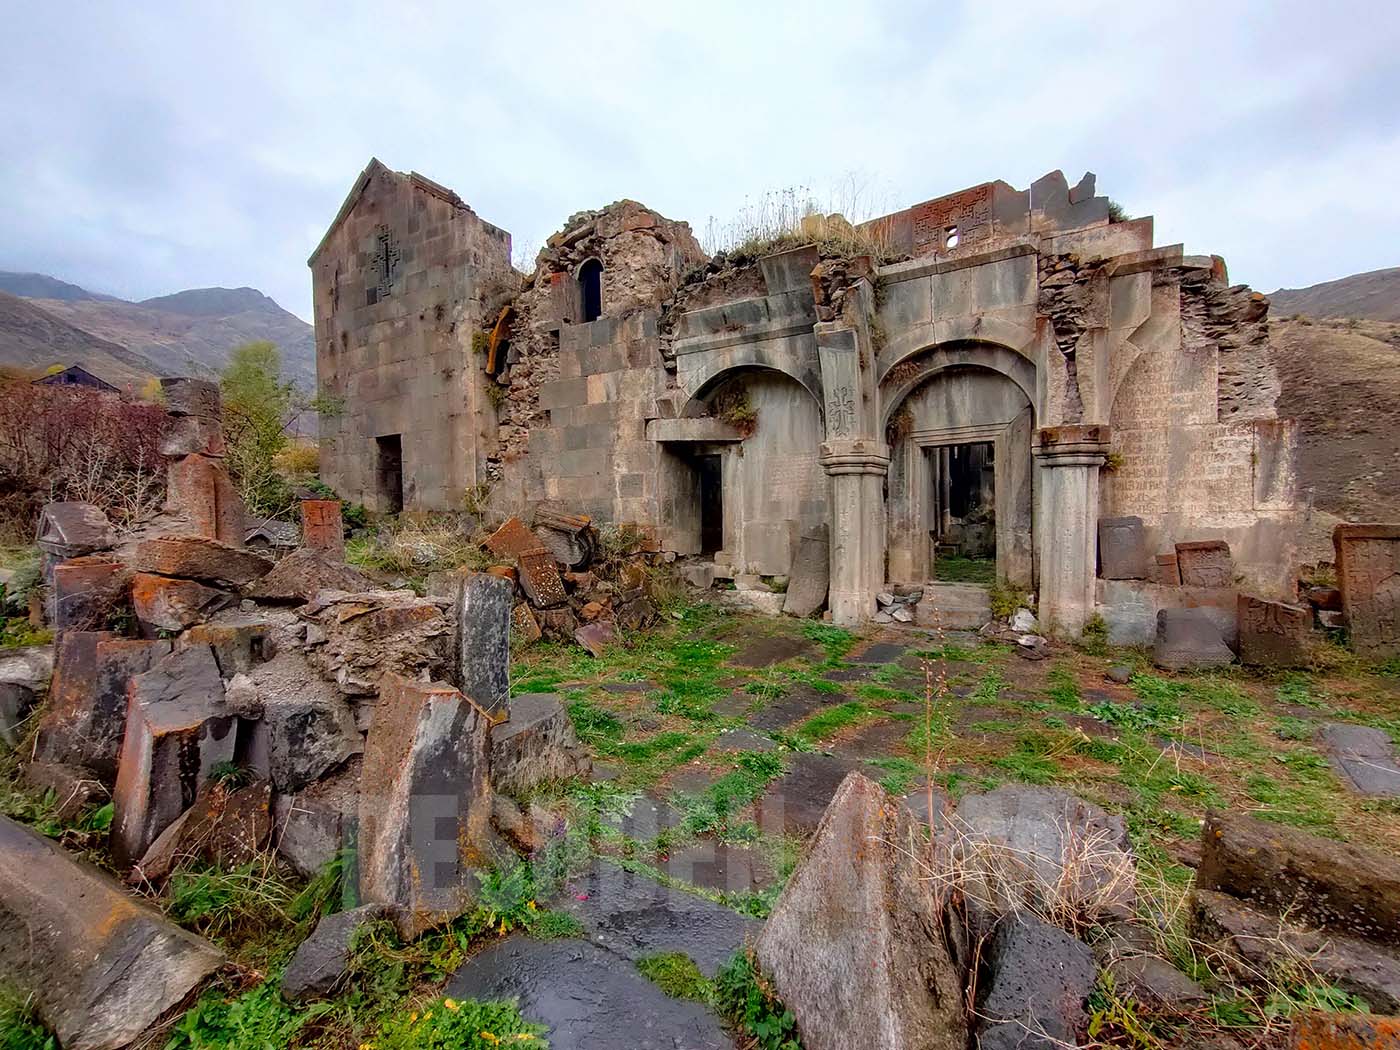 Arates moastery complex, village of Arates, Vayots Dzor province of Armenia.